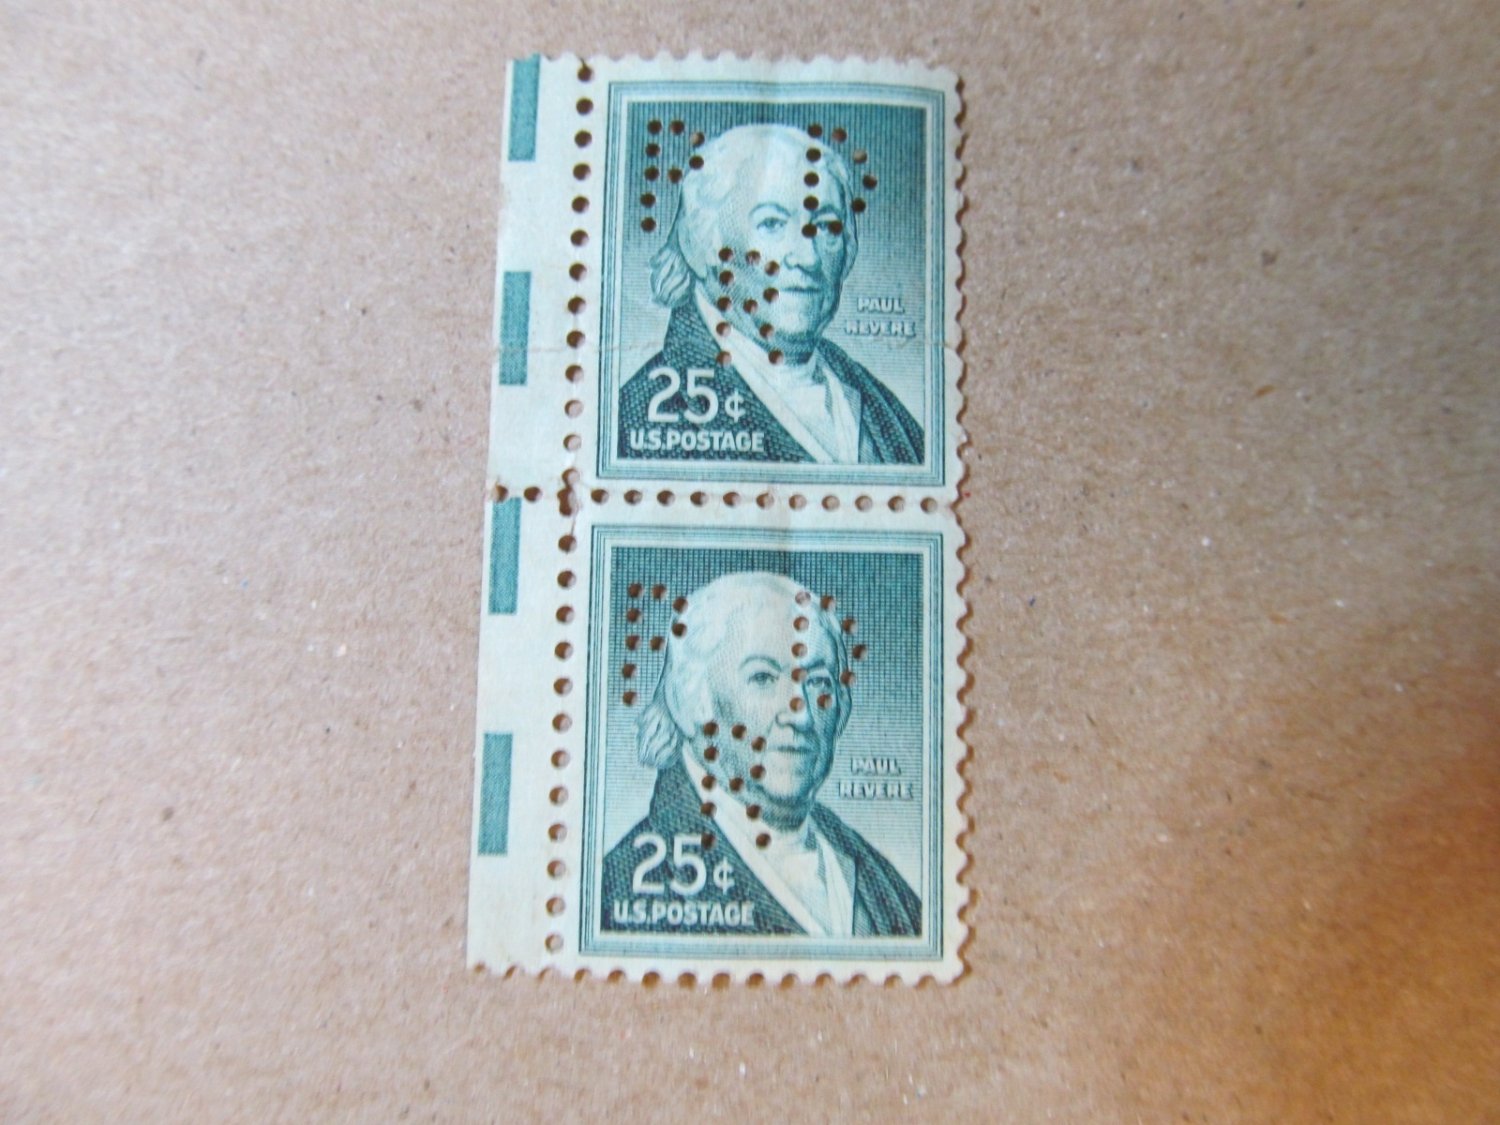 2 UNUSED $0.25 Stamps PERFORATED PAUL REVERE